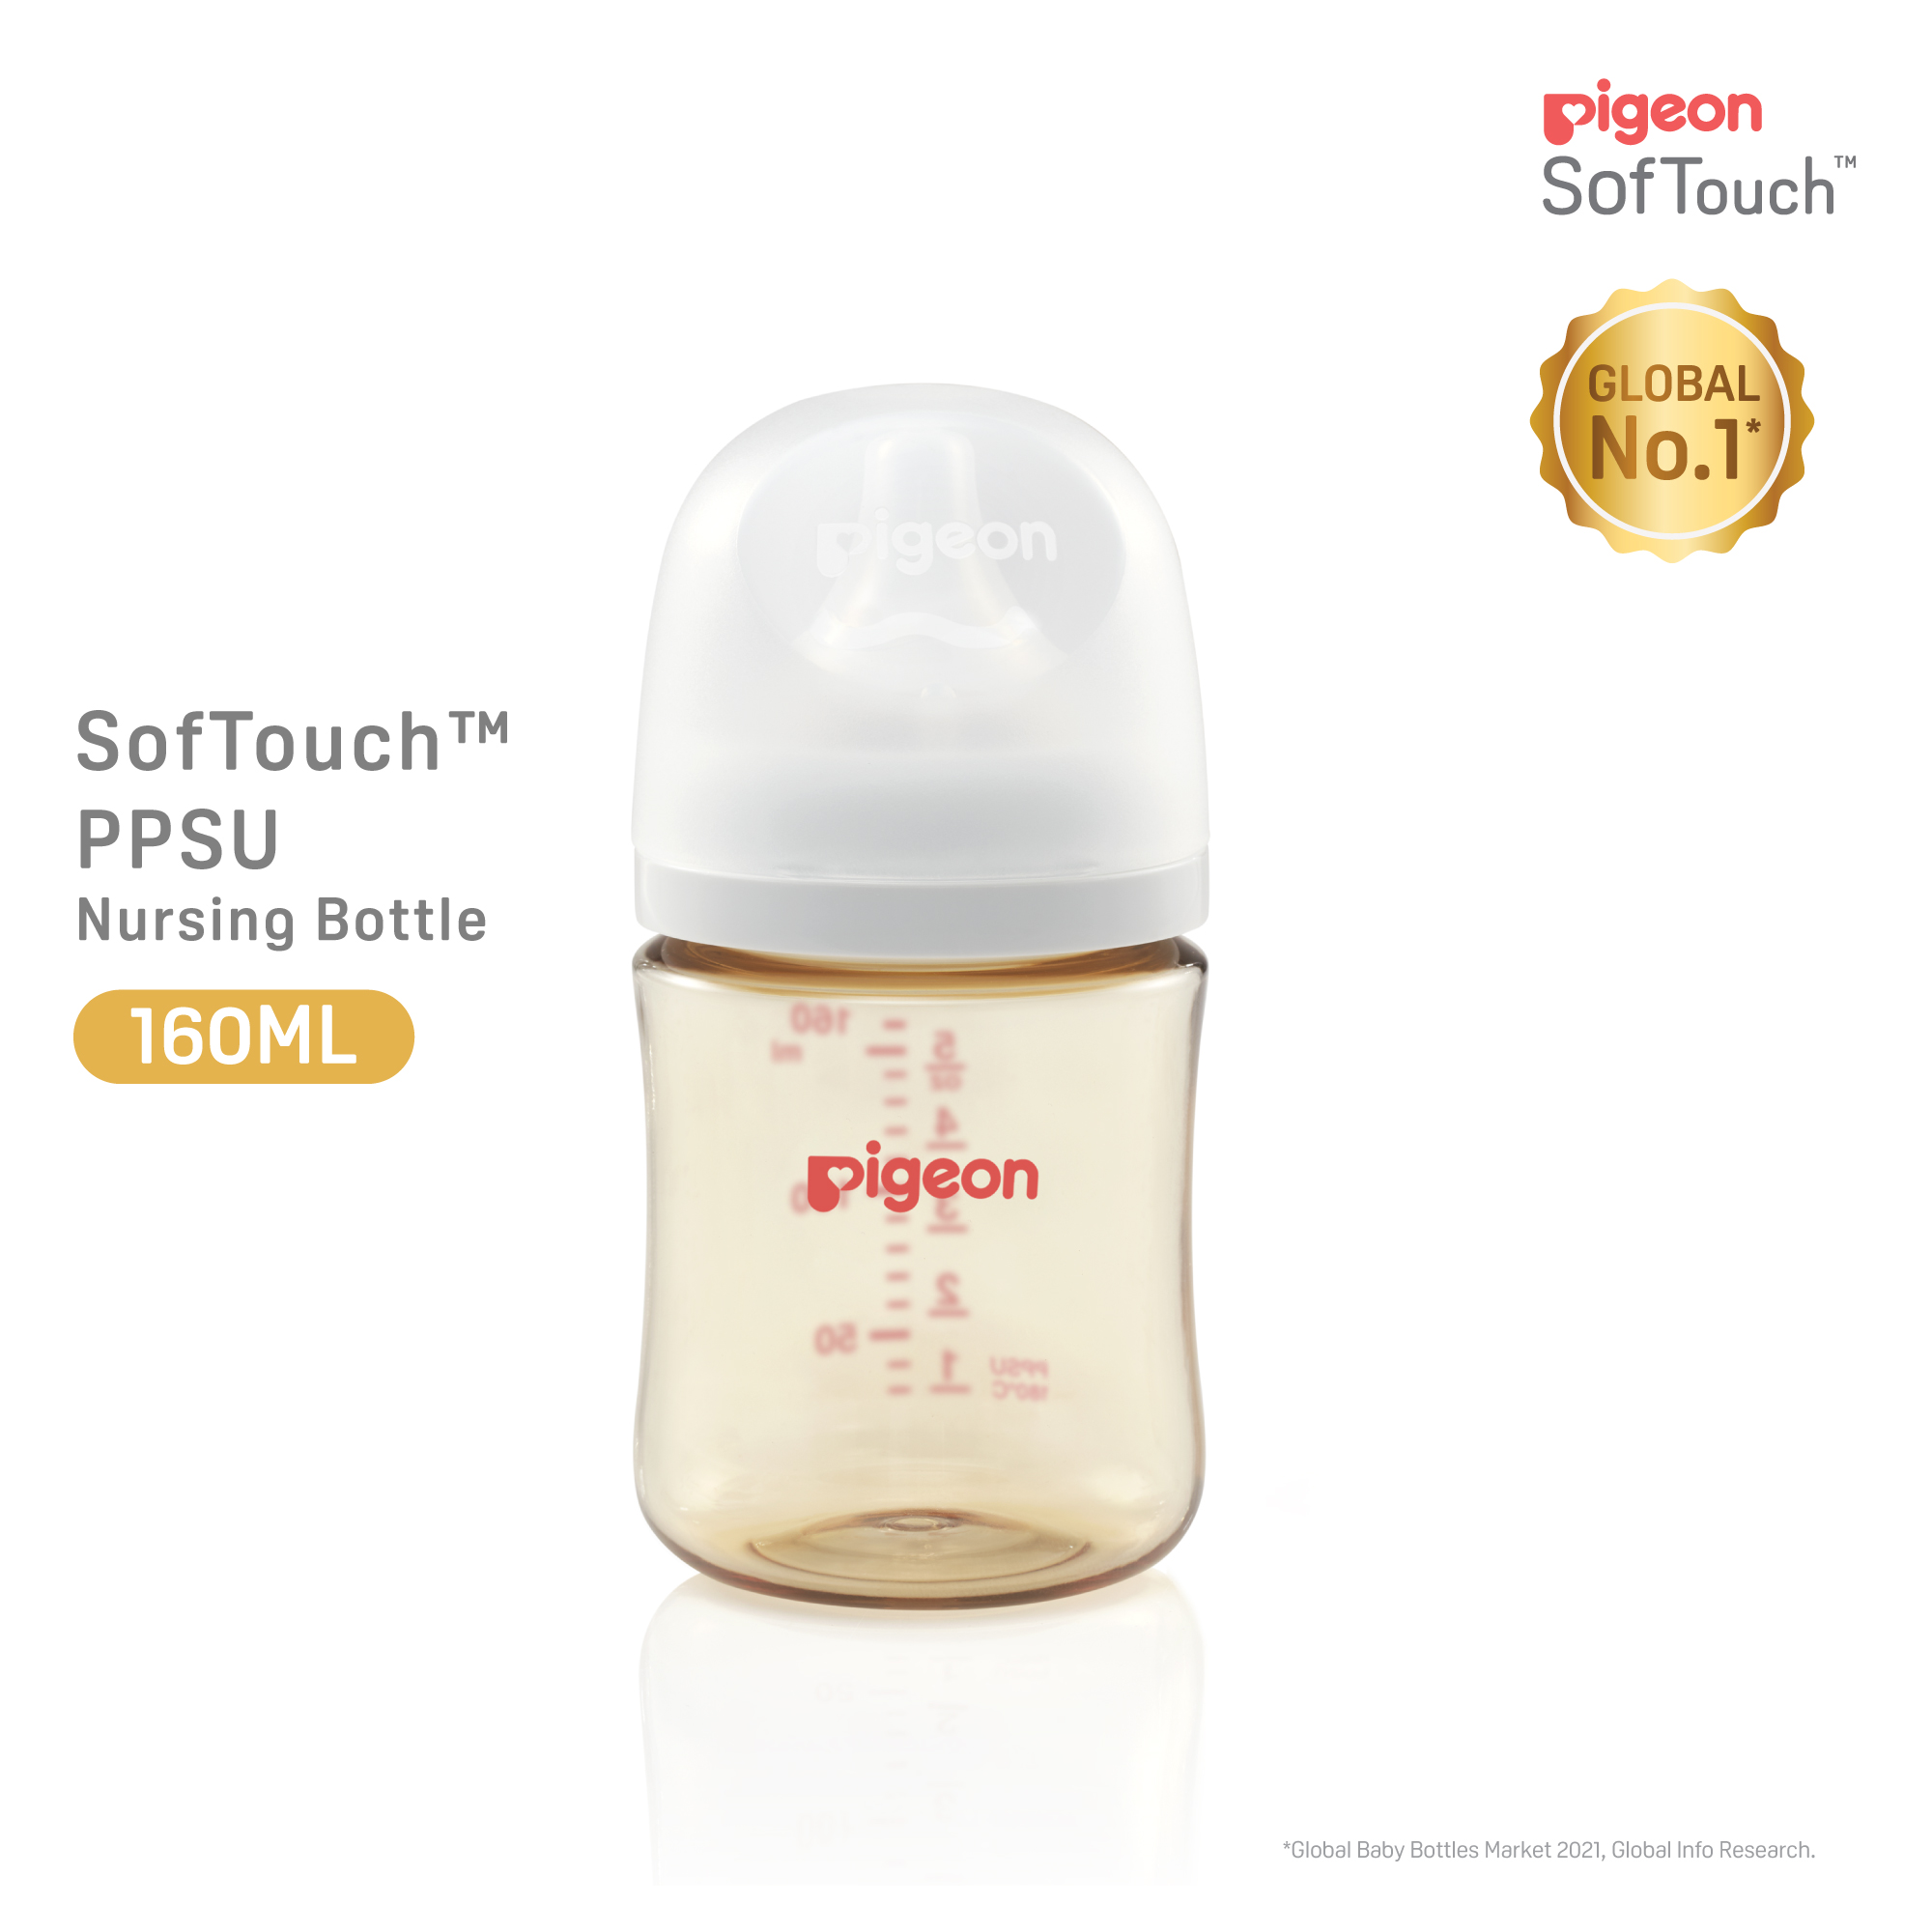 Pigeon SofTouch 3 Nursing Bottle PPSU 160ml (PG-79438)